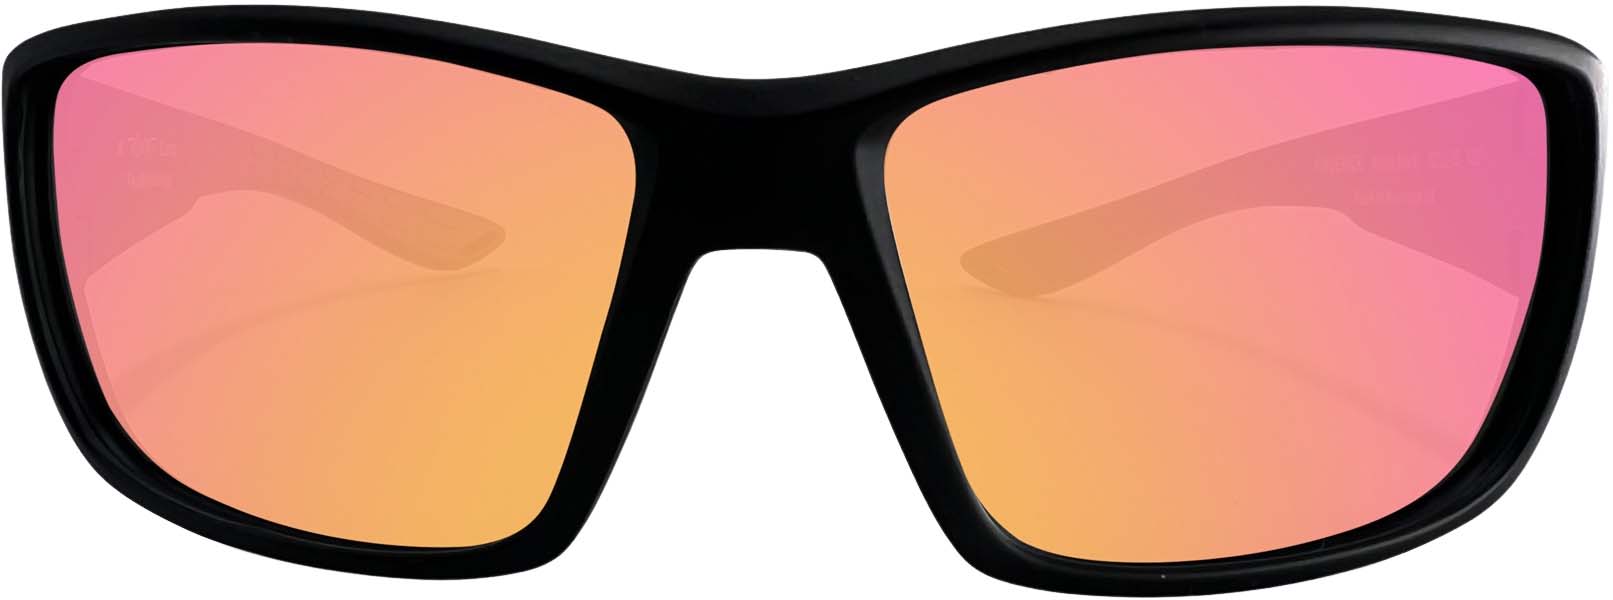 RLVNT Maverick Series Sunglasses